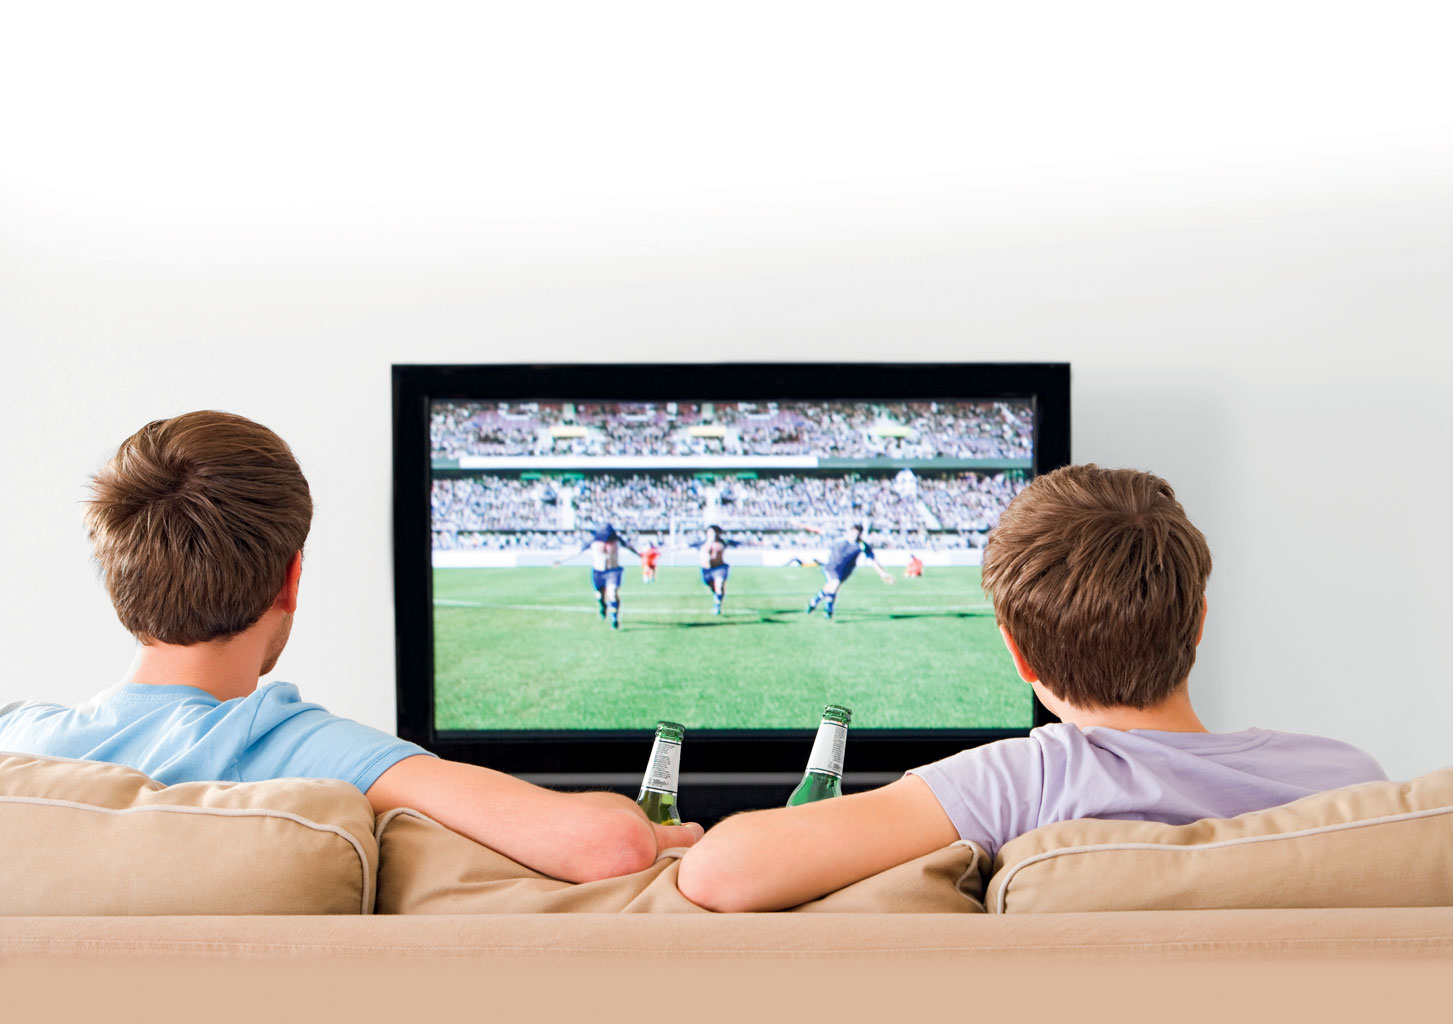 Включи телевизор макс. Футбол по телеку. Спорт по ТВ. Люди смотрят футбол по телевизору. Футбольный матч в телевизоре.